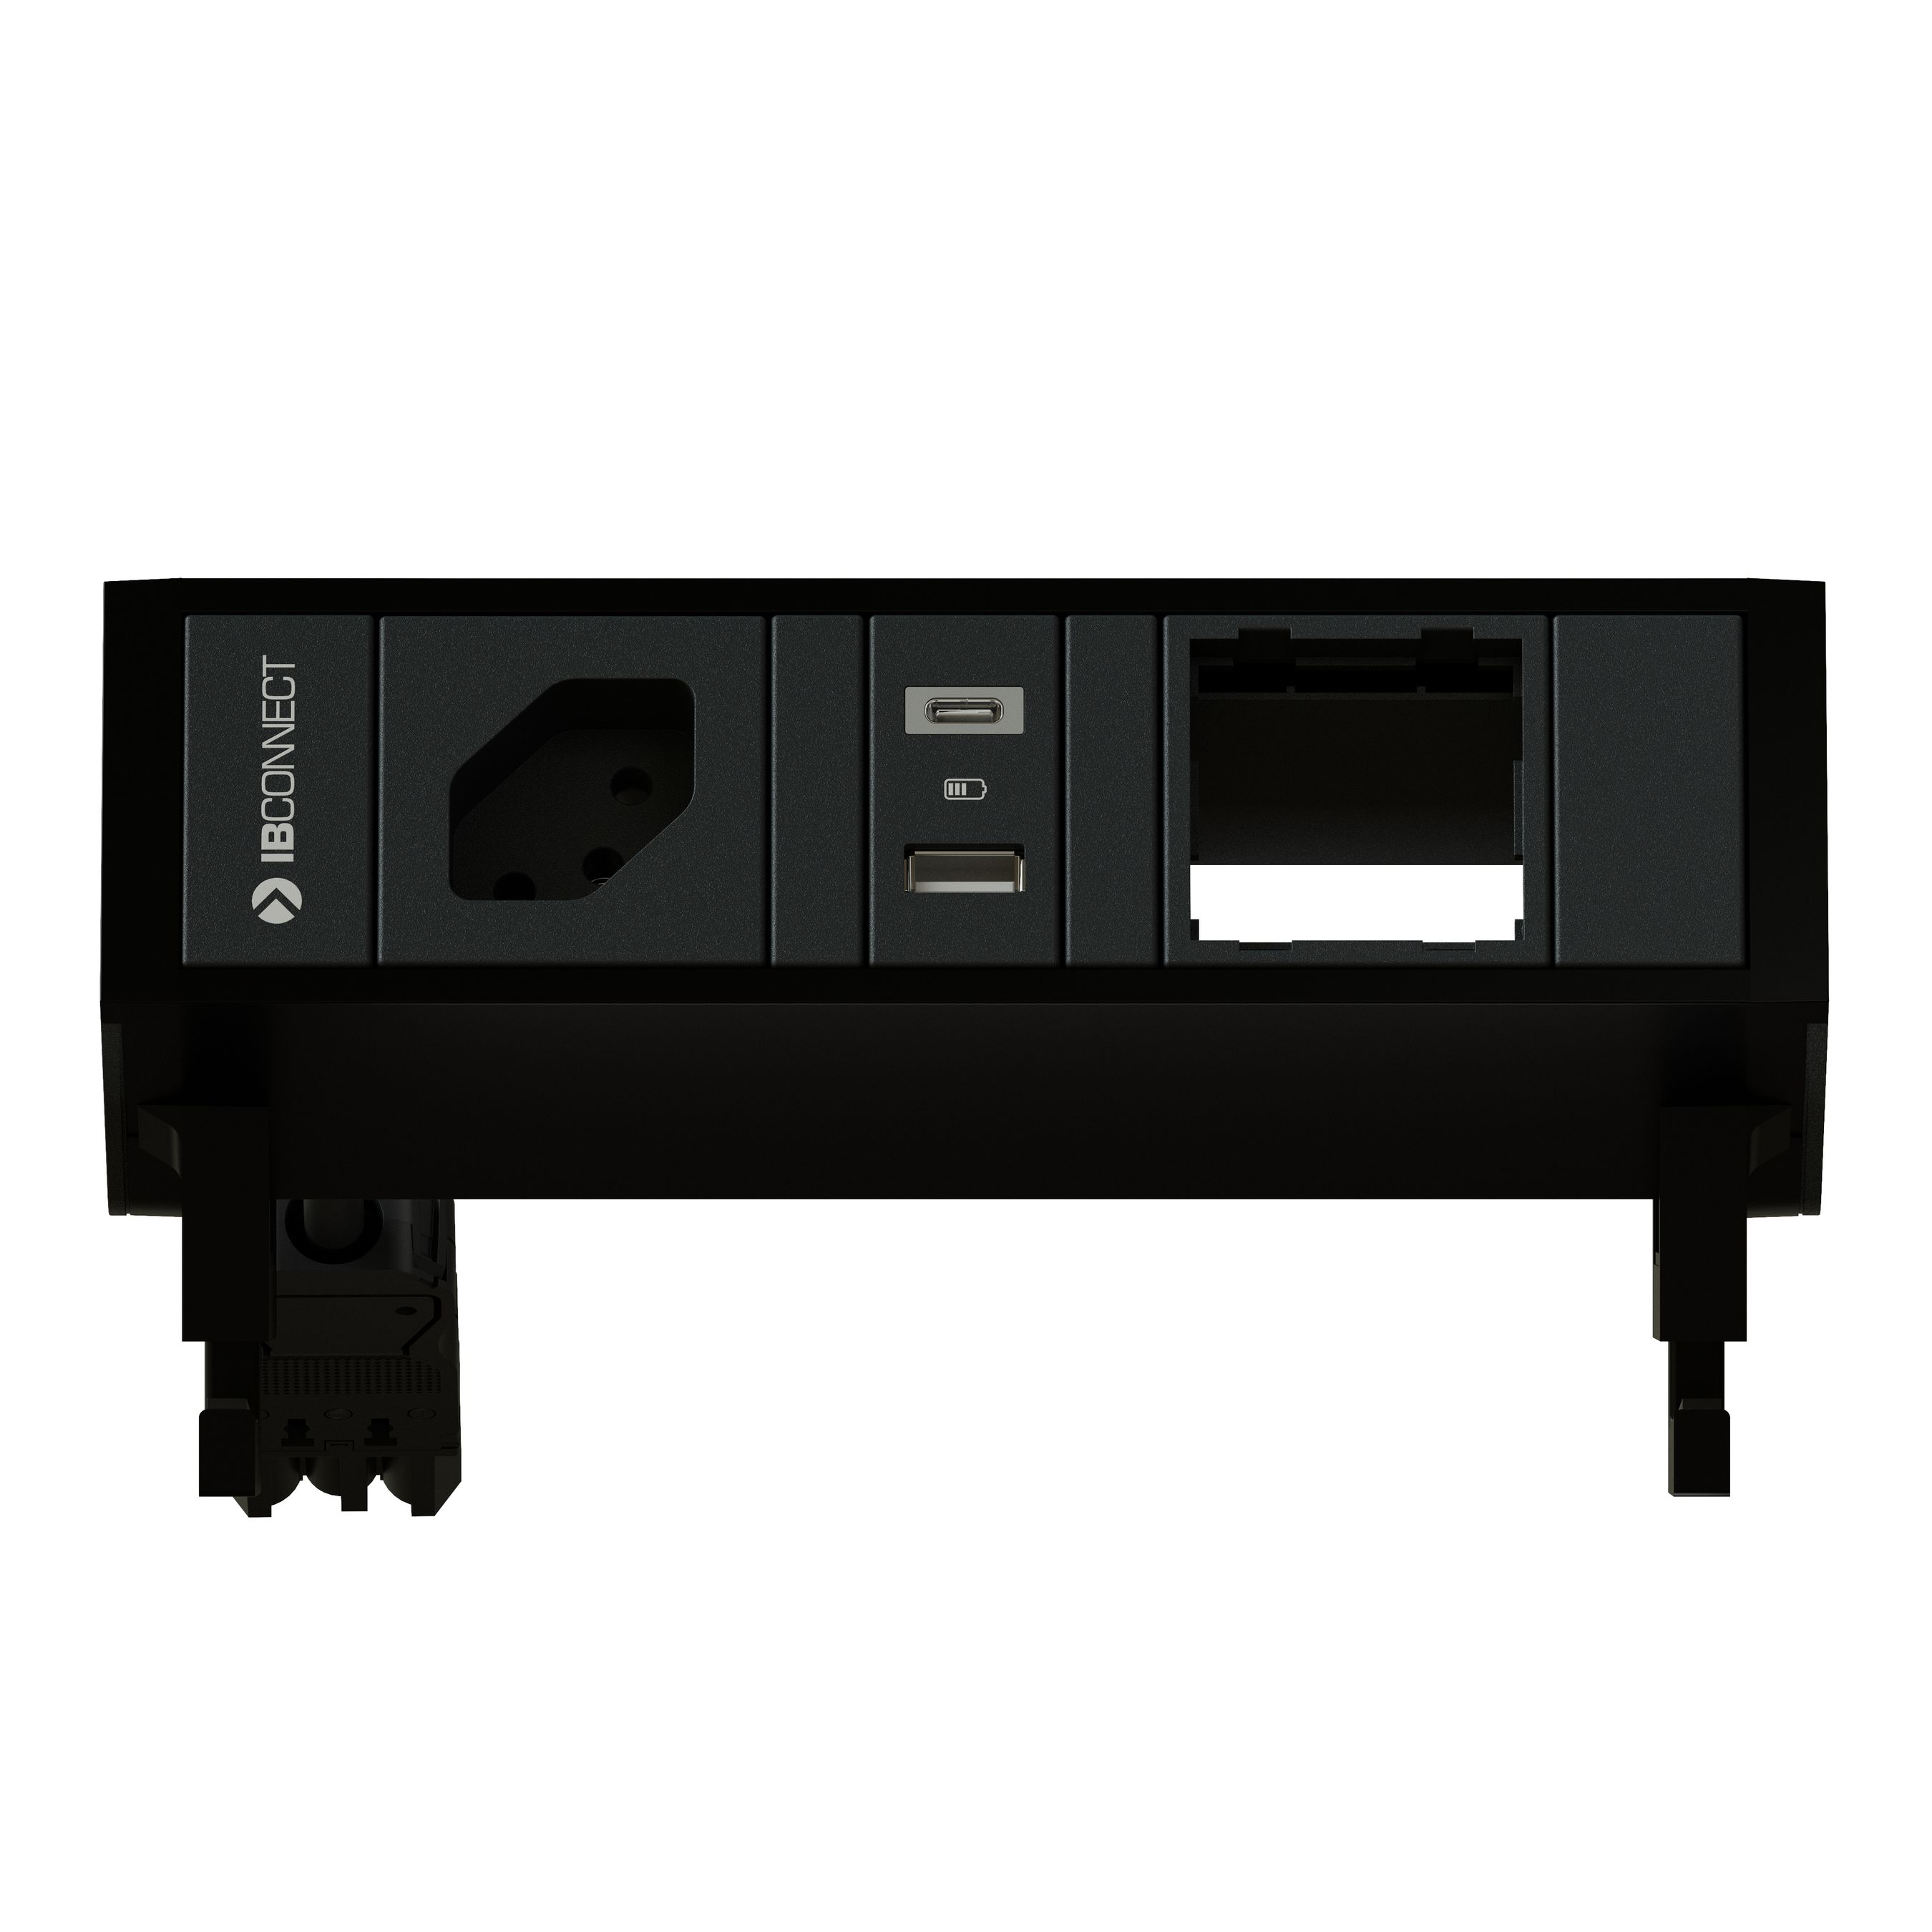 SUPRA Steckdoseneinheit schwarz 1x Typ 13 1x USB-A/C 1x Leermodul